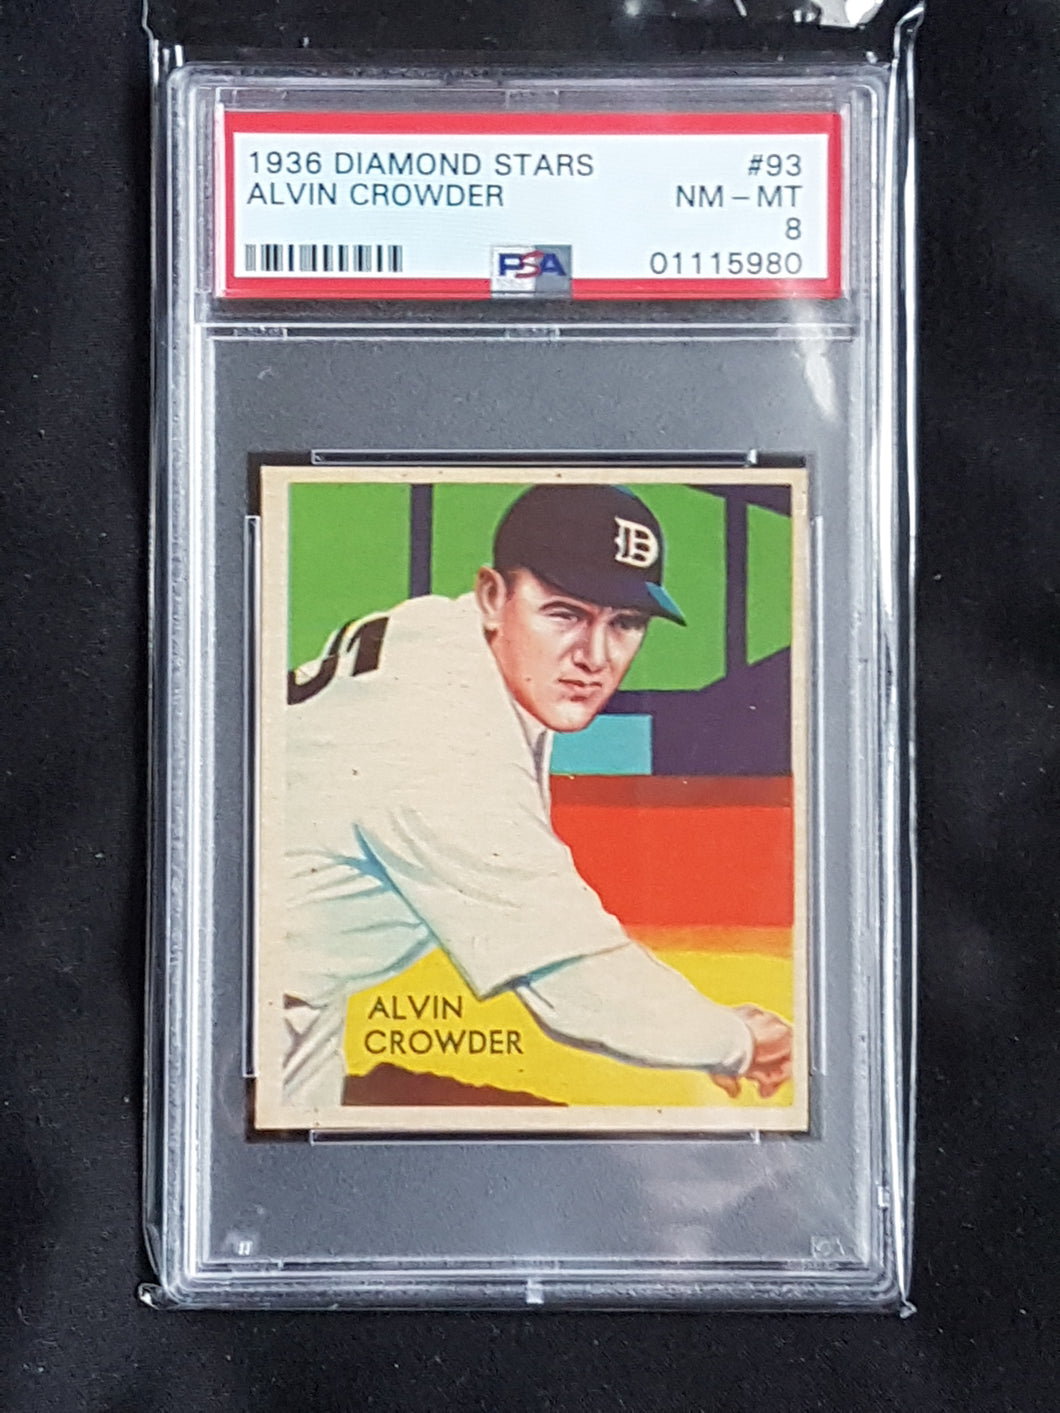 1936 Diamond Stars Alvin Crowder #93 PSA 8 (Pop 19) Only 2 graded higher!